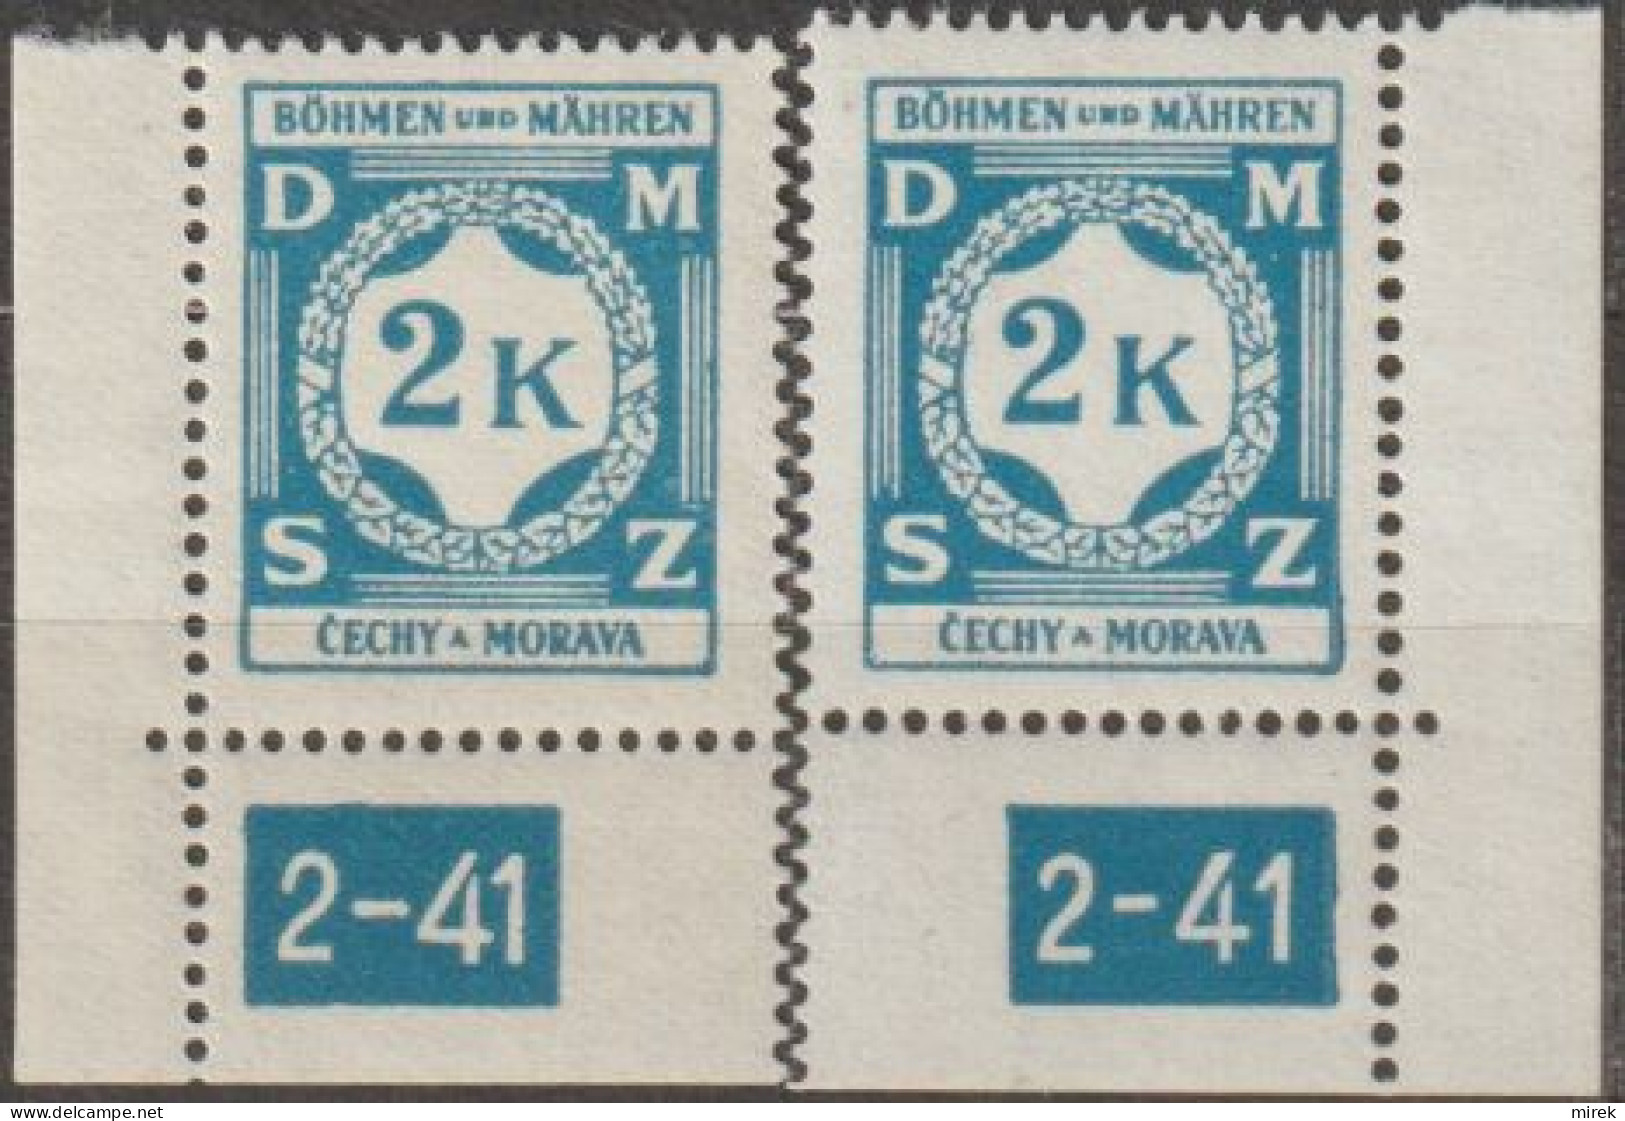 32/ Pof. SL 9, Corner Stamps, Plate Number 2-41 - Unused Stamps